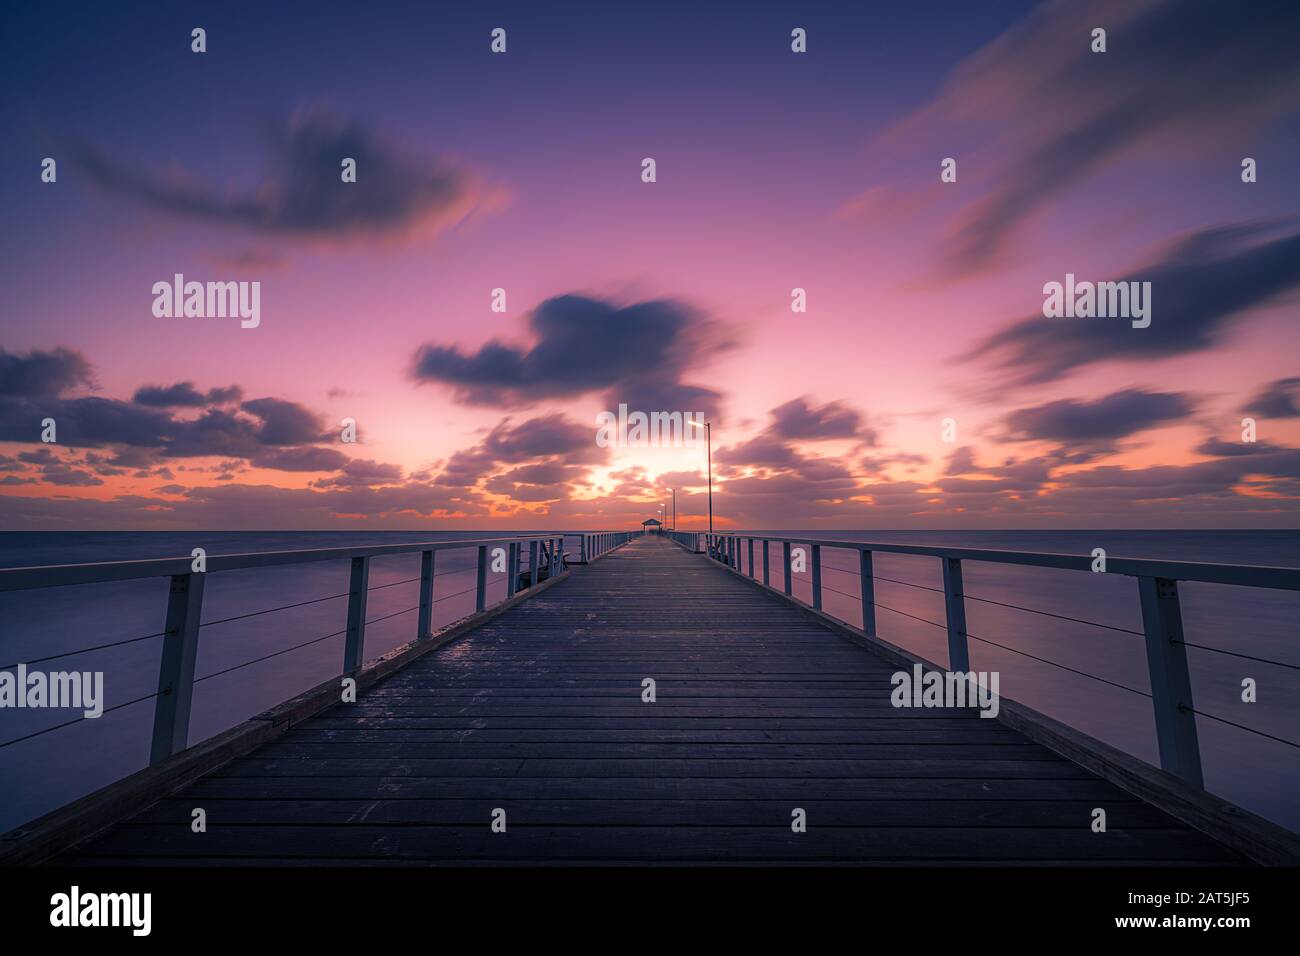 Henley beach jetty at sunset, Adelaide, South Australia Stock Photo